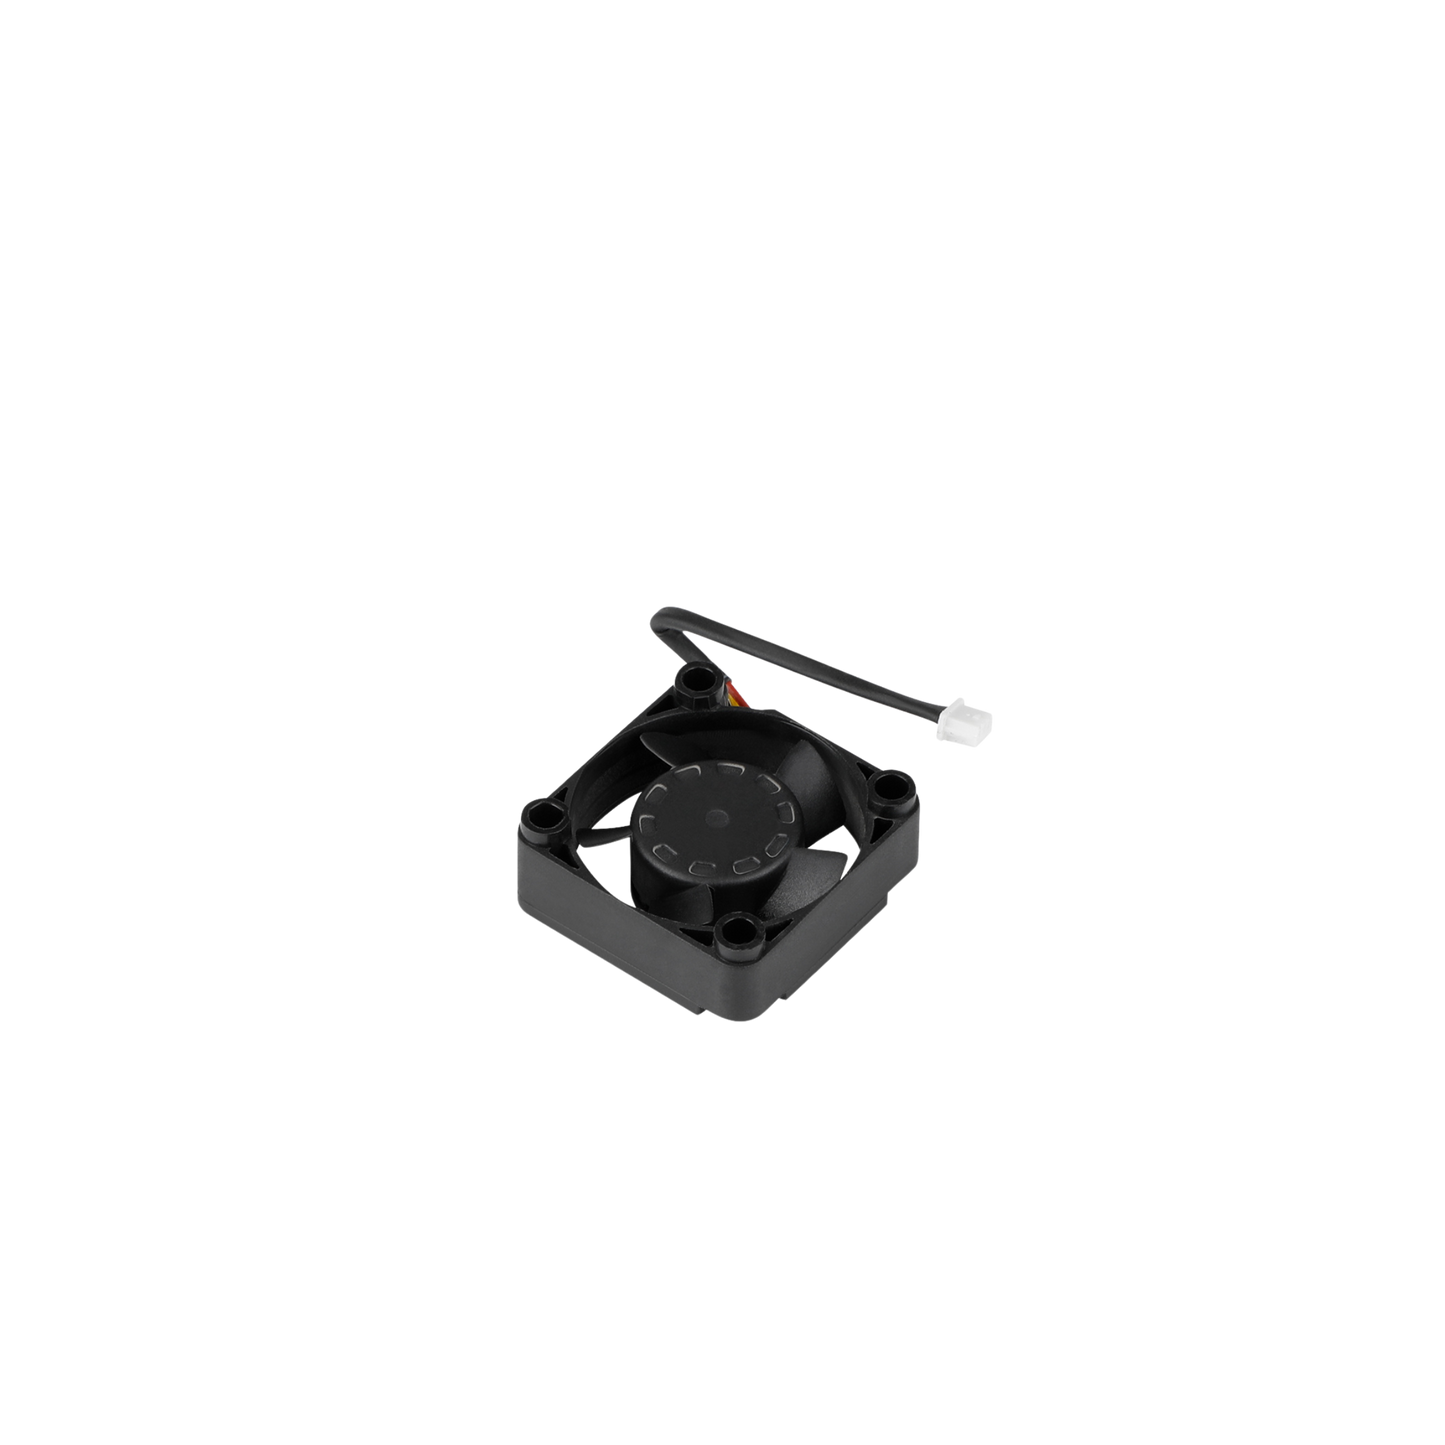 Creality 3010 Axial Fan for K1, K1C, K1 Max 3D Printer